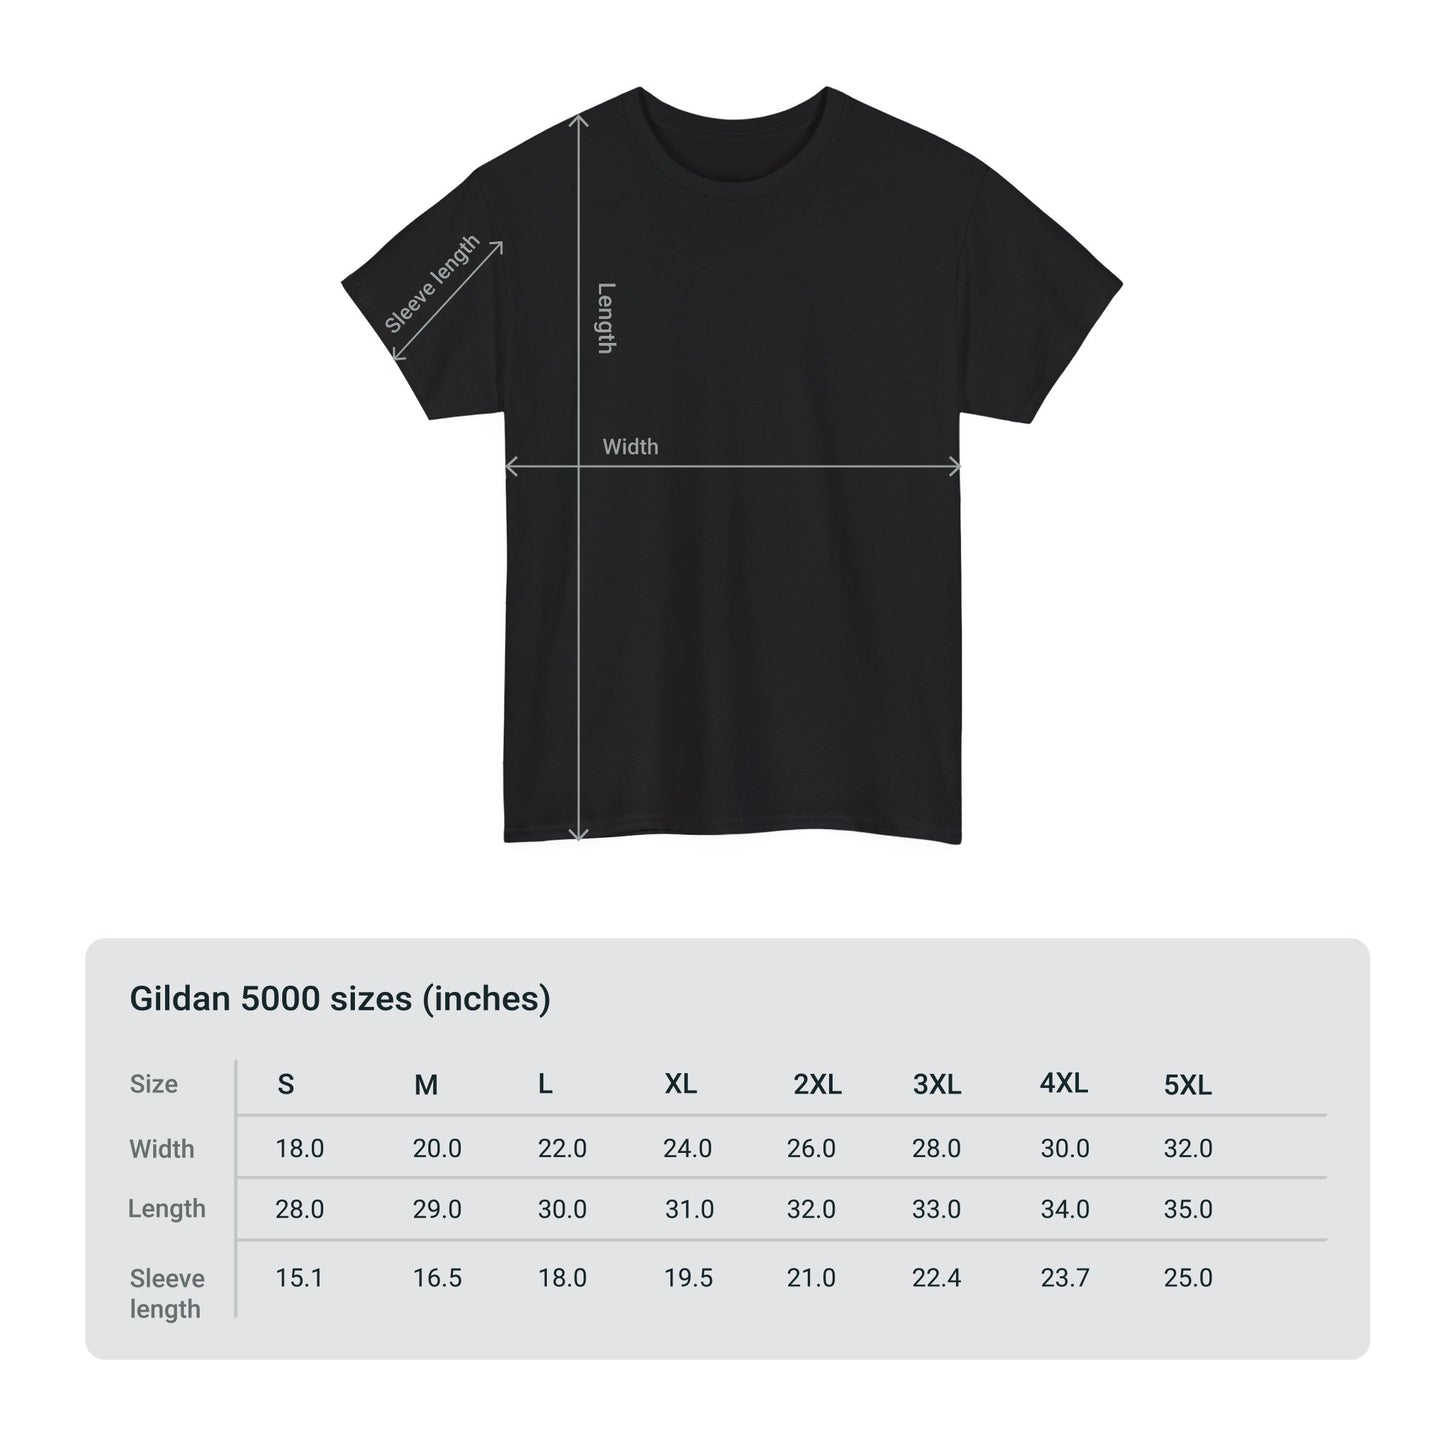 Samurai T-Shirt, Japanese Tee 100% Cotton, 4 Colours, AUS - USA warehouse, free post.